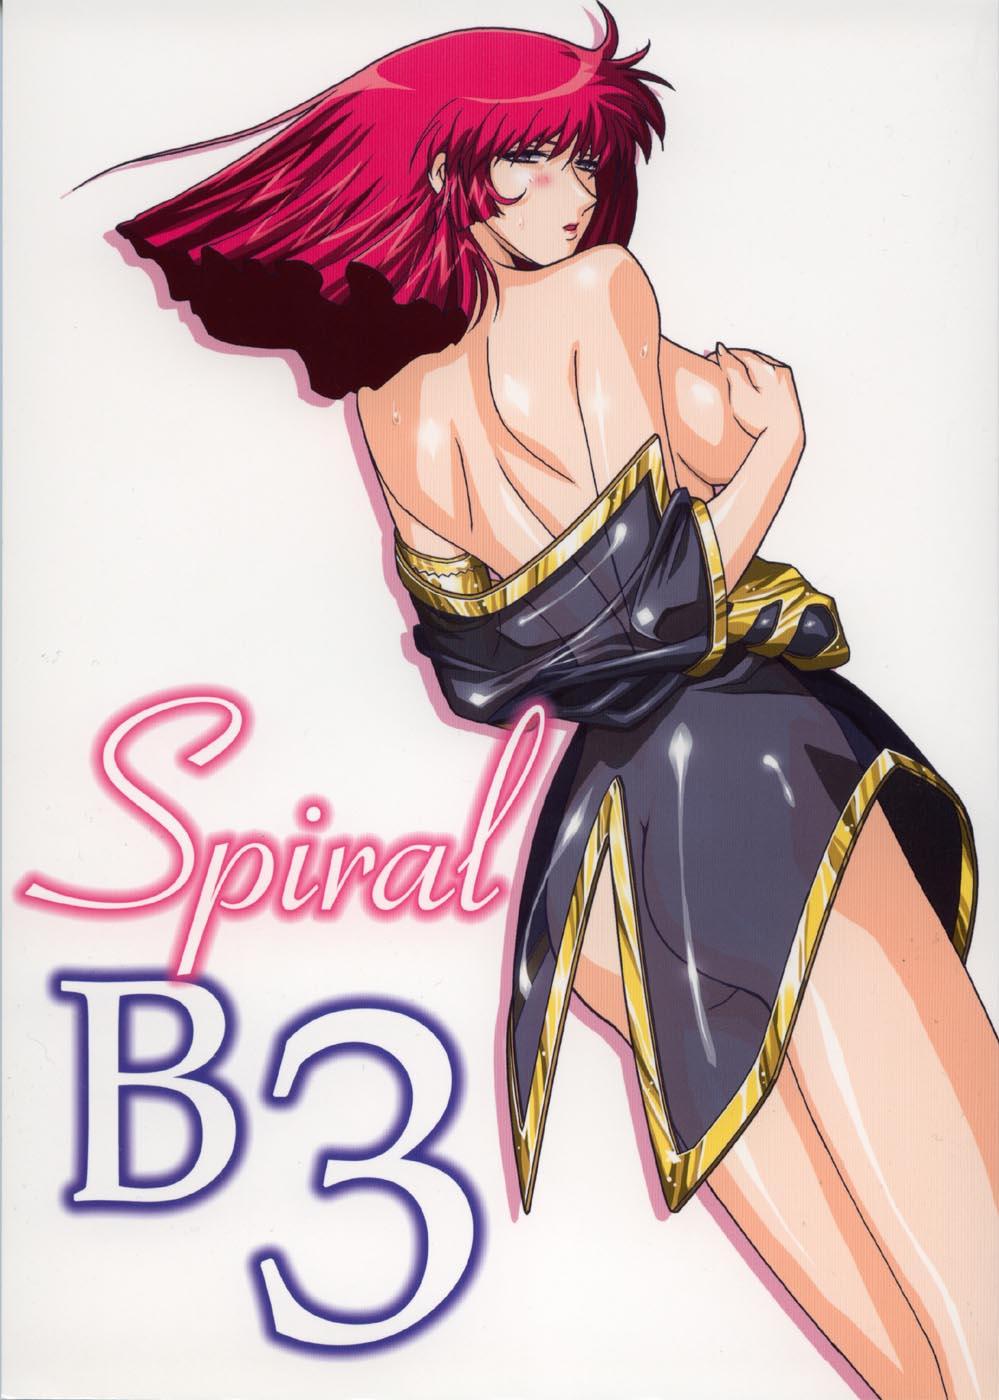 Spiral B3 0